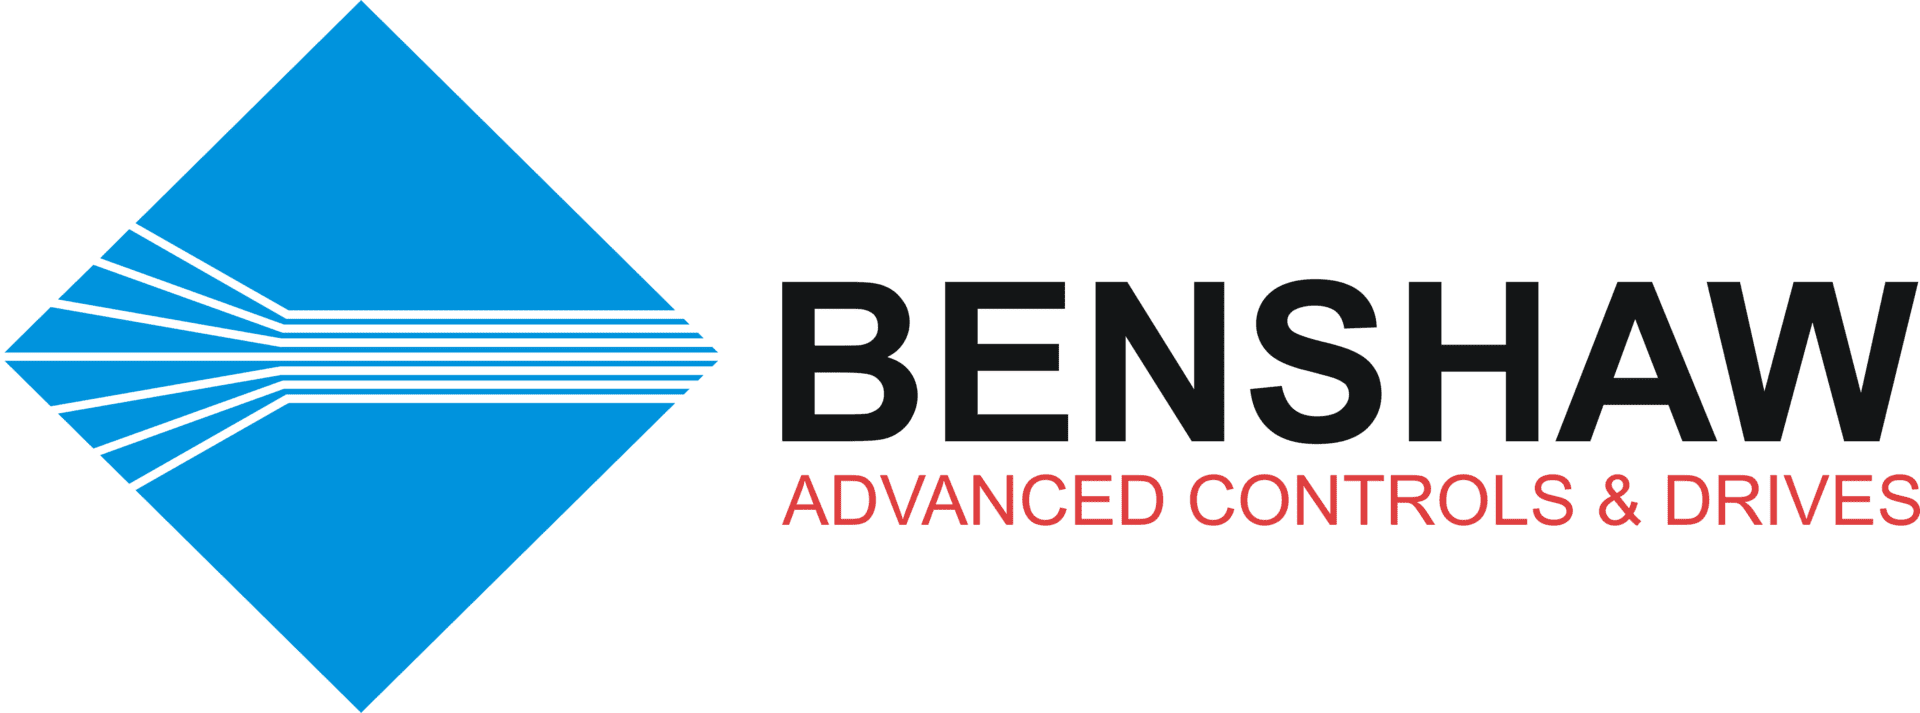 Benshaw advanced controls & drives.